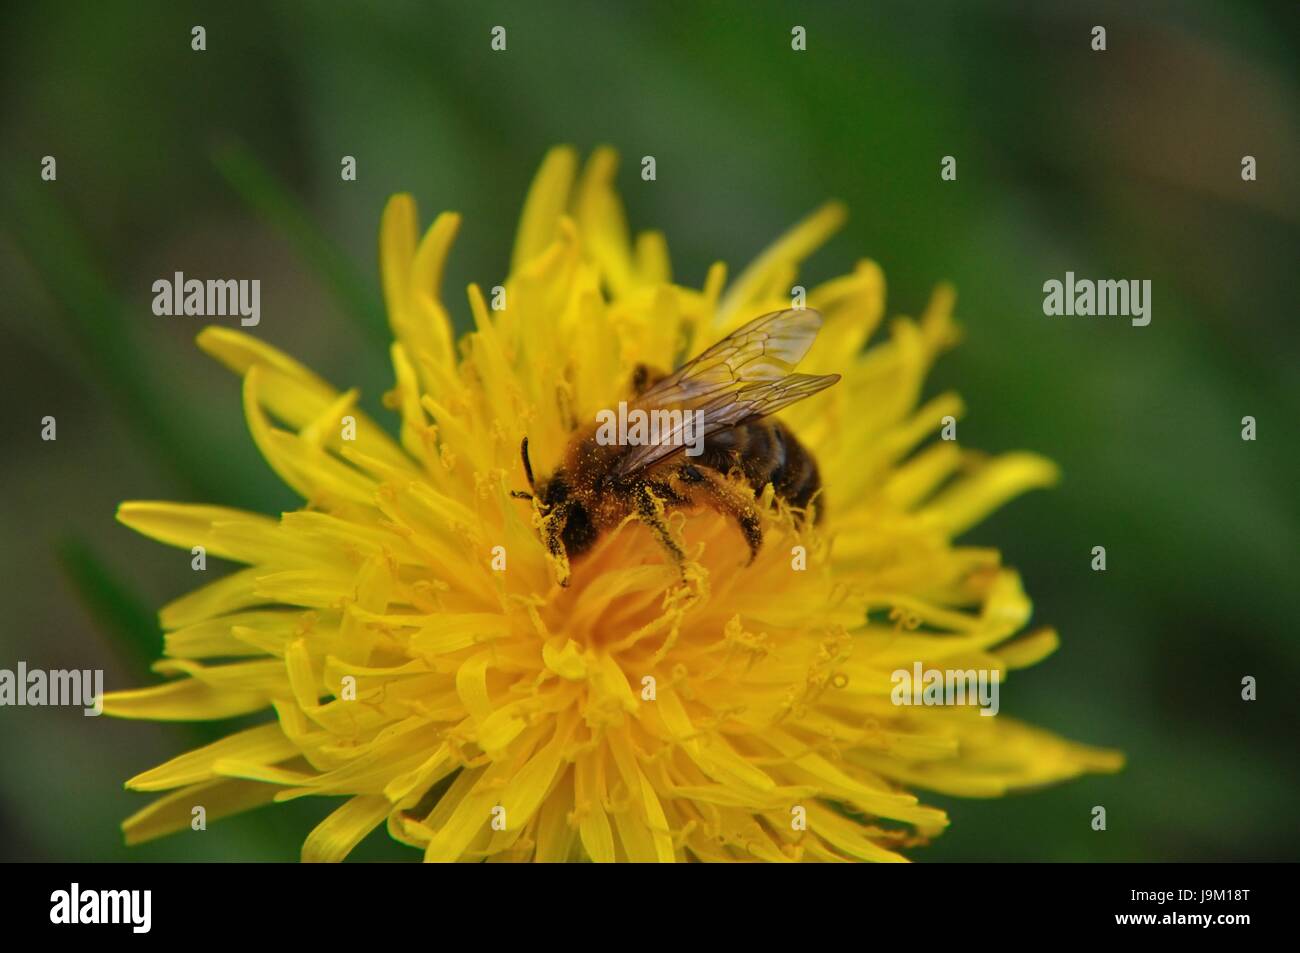 garden, insect, dandelion, gardens, medicinal plant, meadow, bee, buttercup, Stock Photo